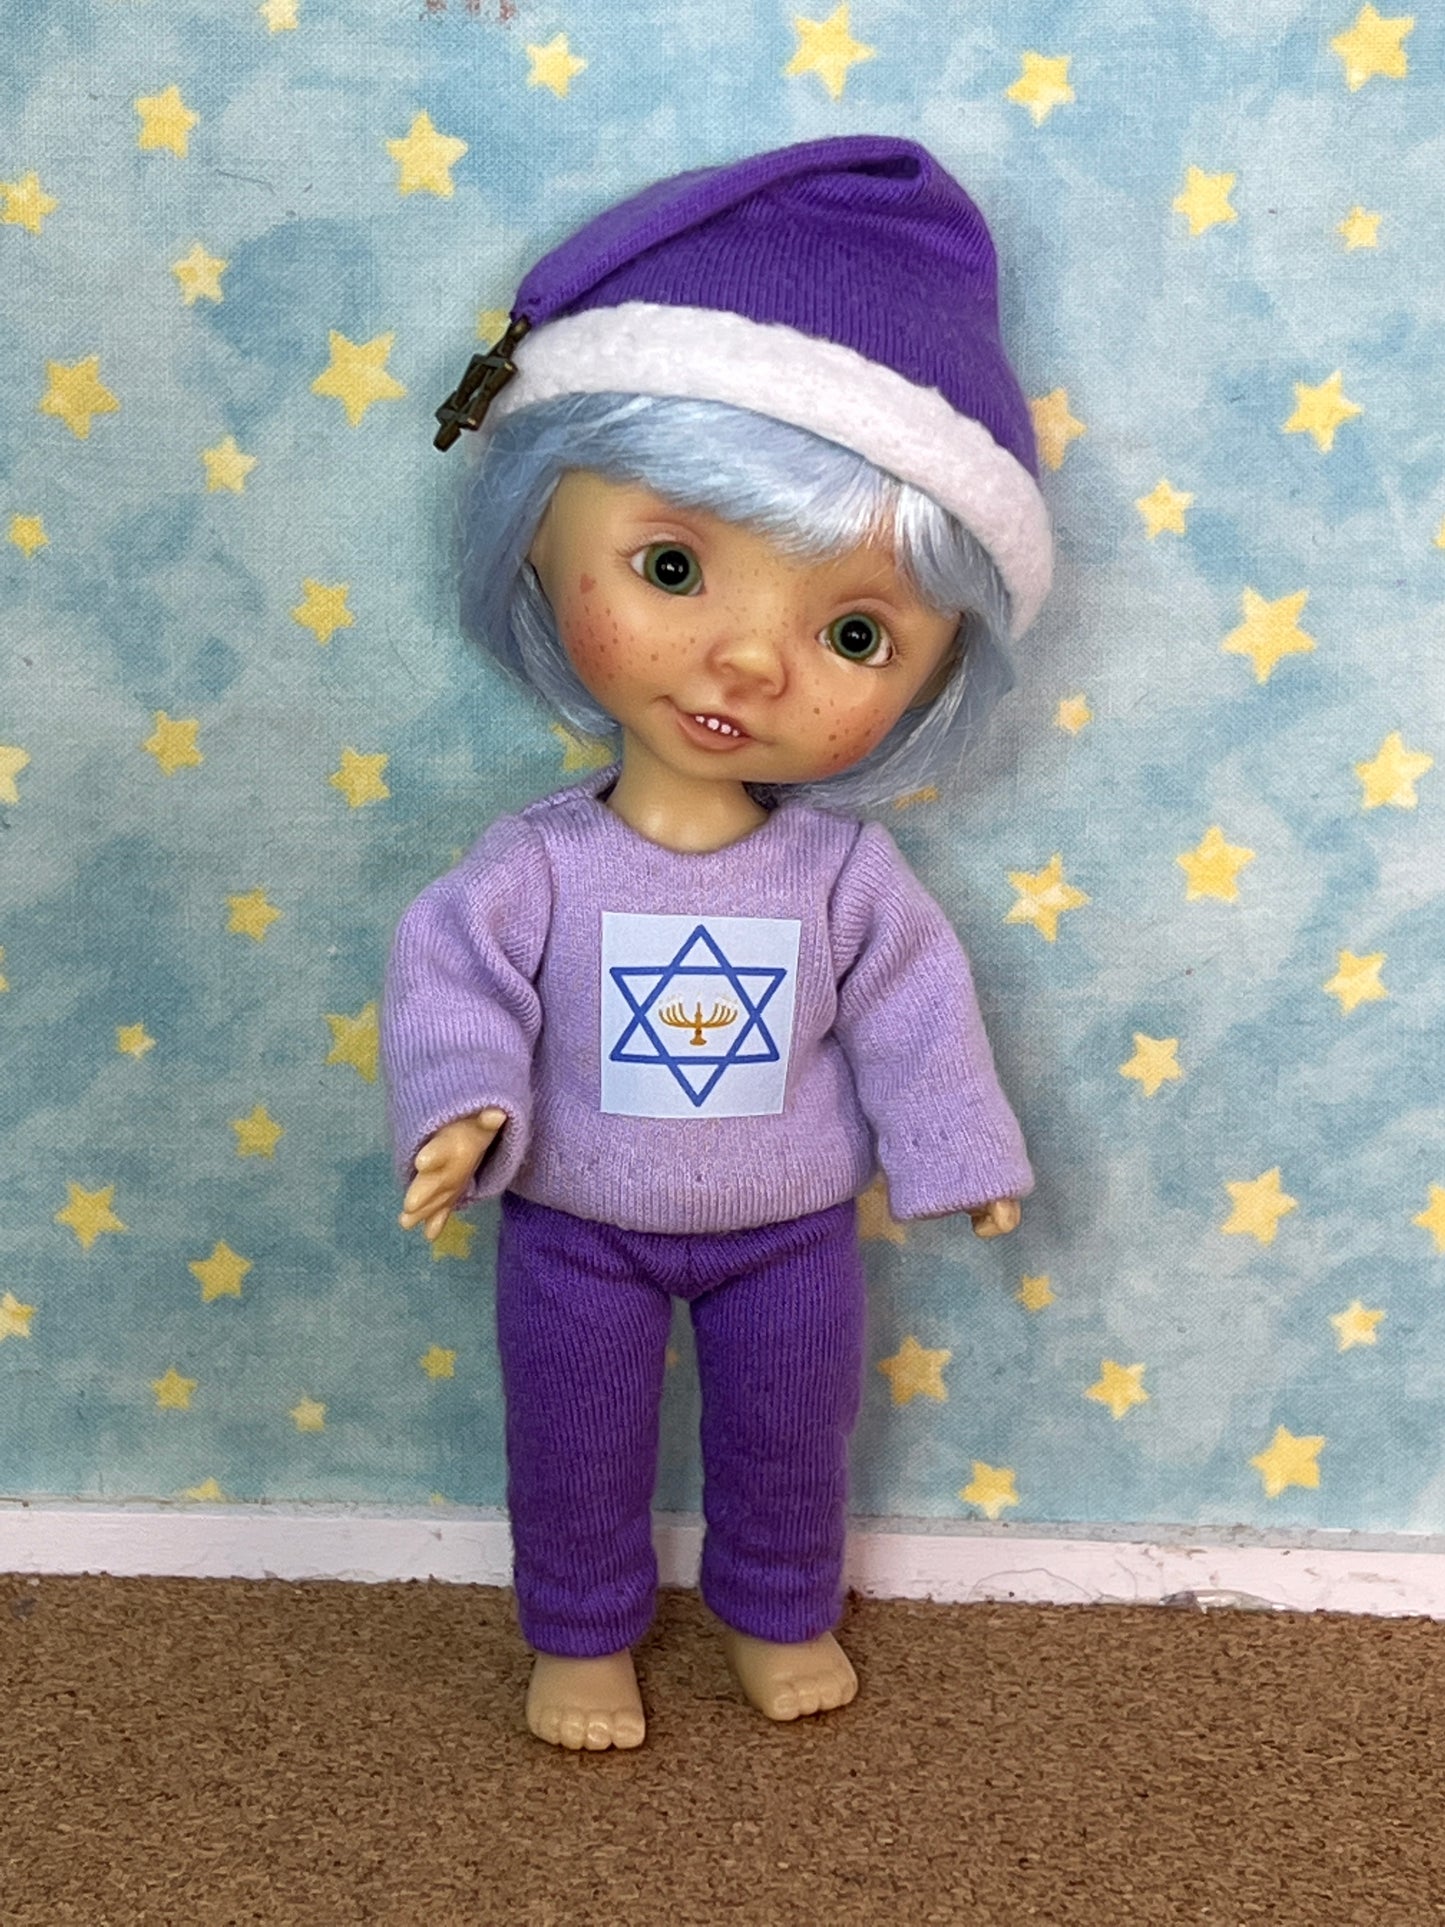 Hanukkah Miniature Iron-on Images